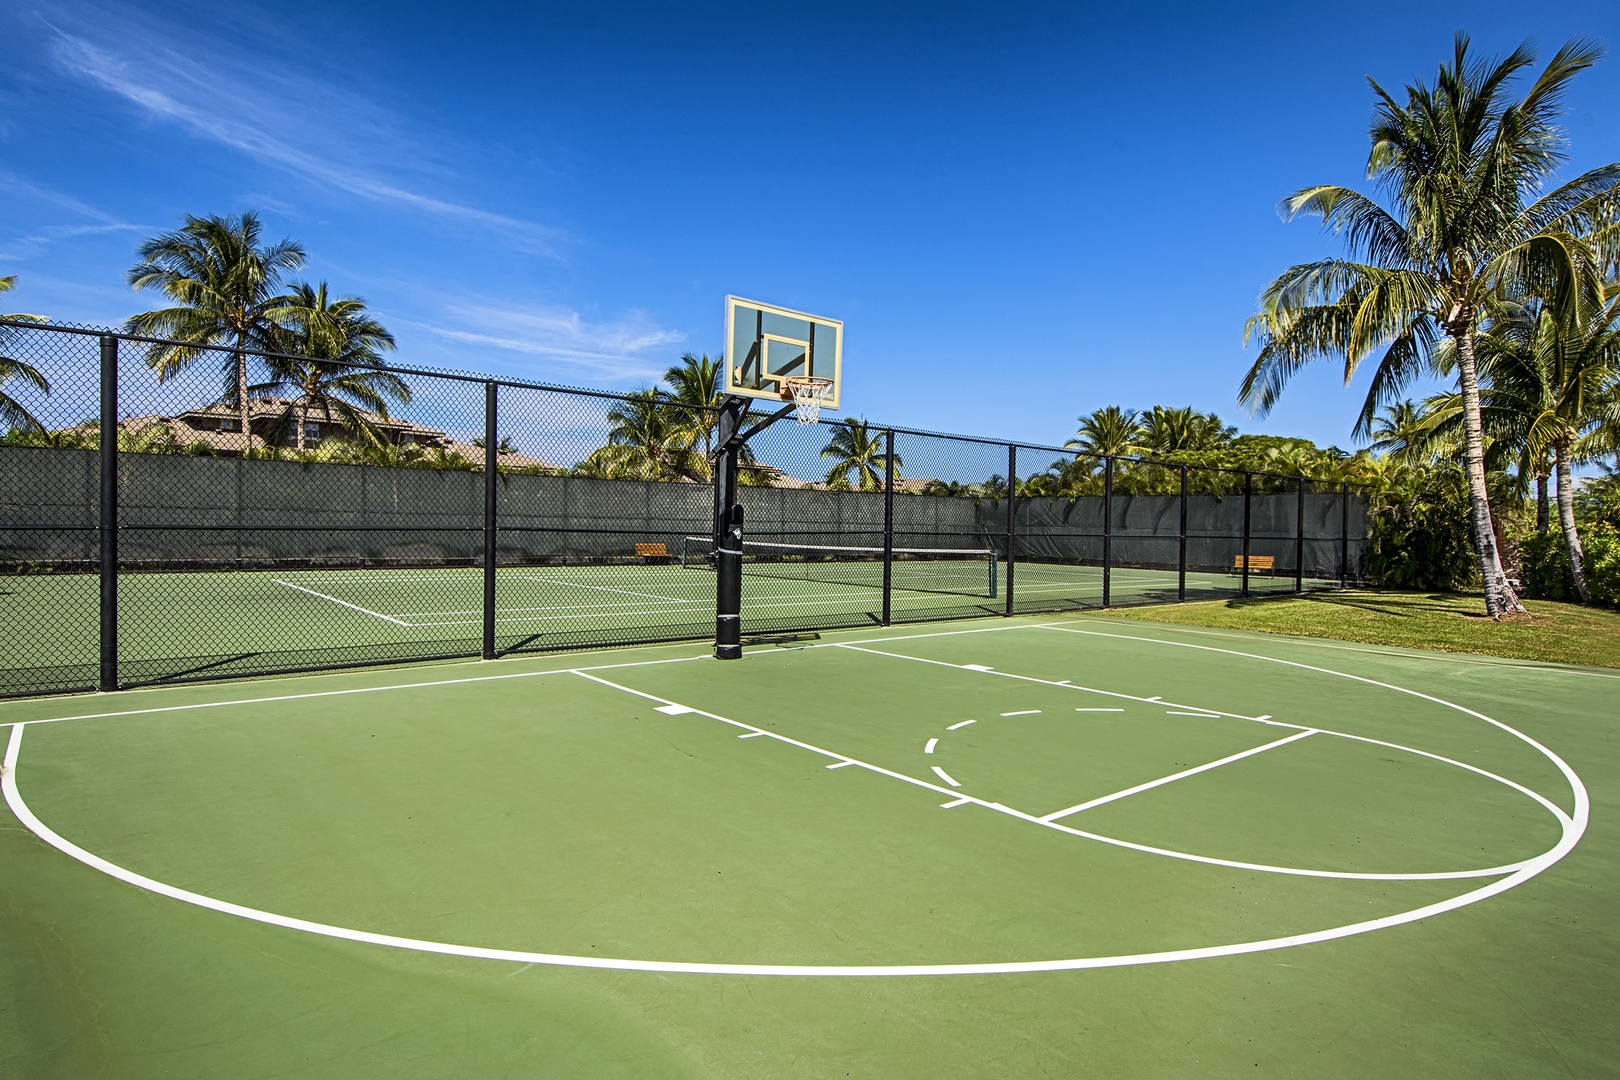 Waikoloa Vacation Rentals, Hali'i Kai at Waikoloa Beach Resort 9F - Hali'i Kai basketball courts.